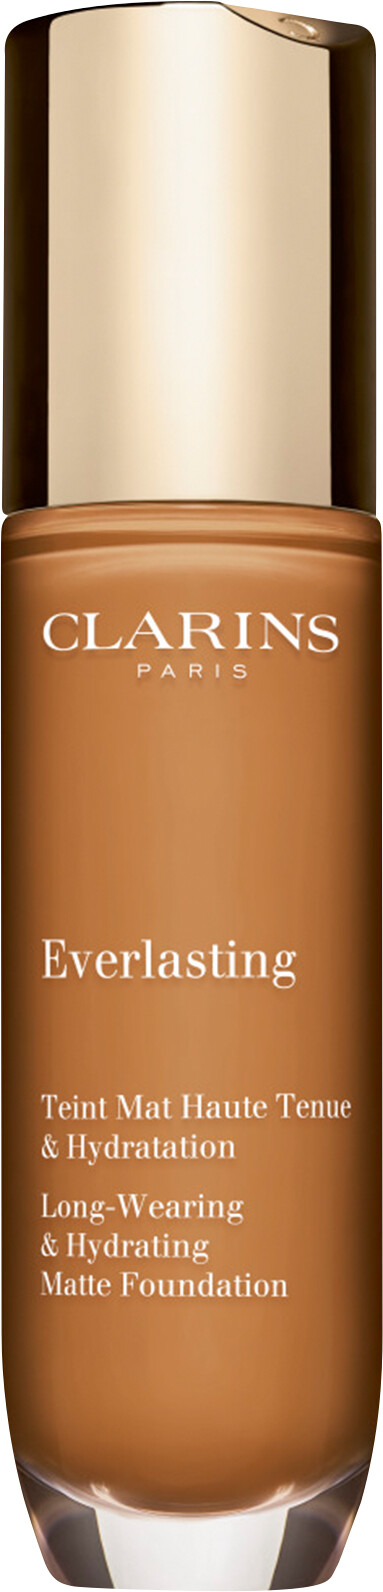 Clarins Everlasting Long-Wearing & Hydrating Matte Foundation 30ml 117N - Hazelnut